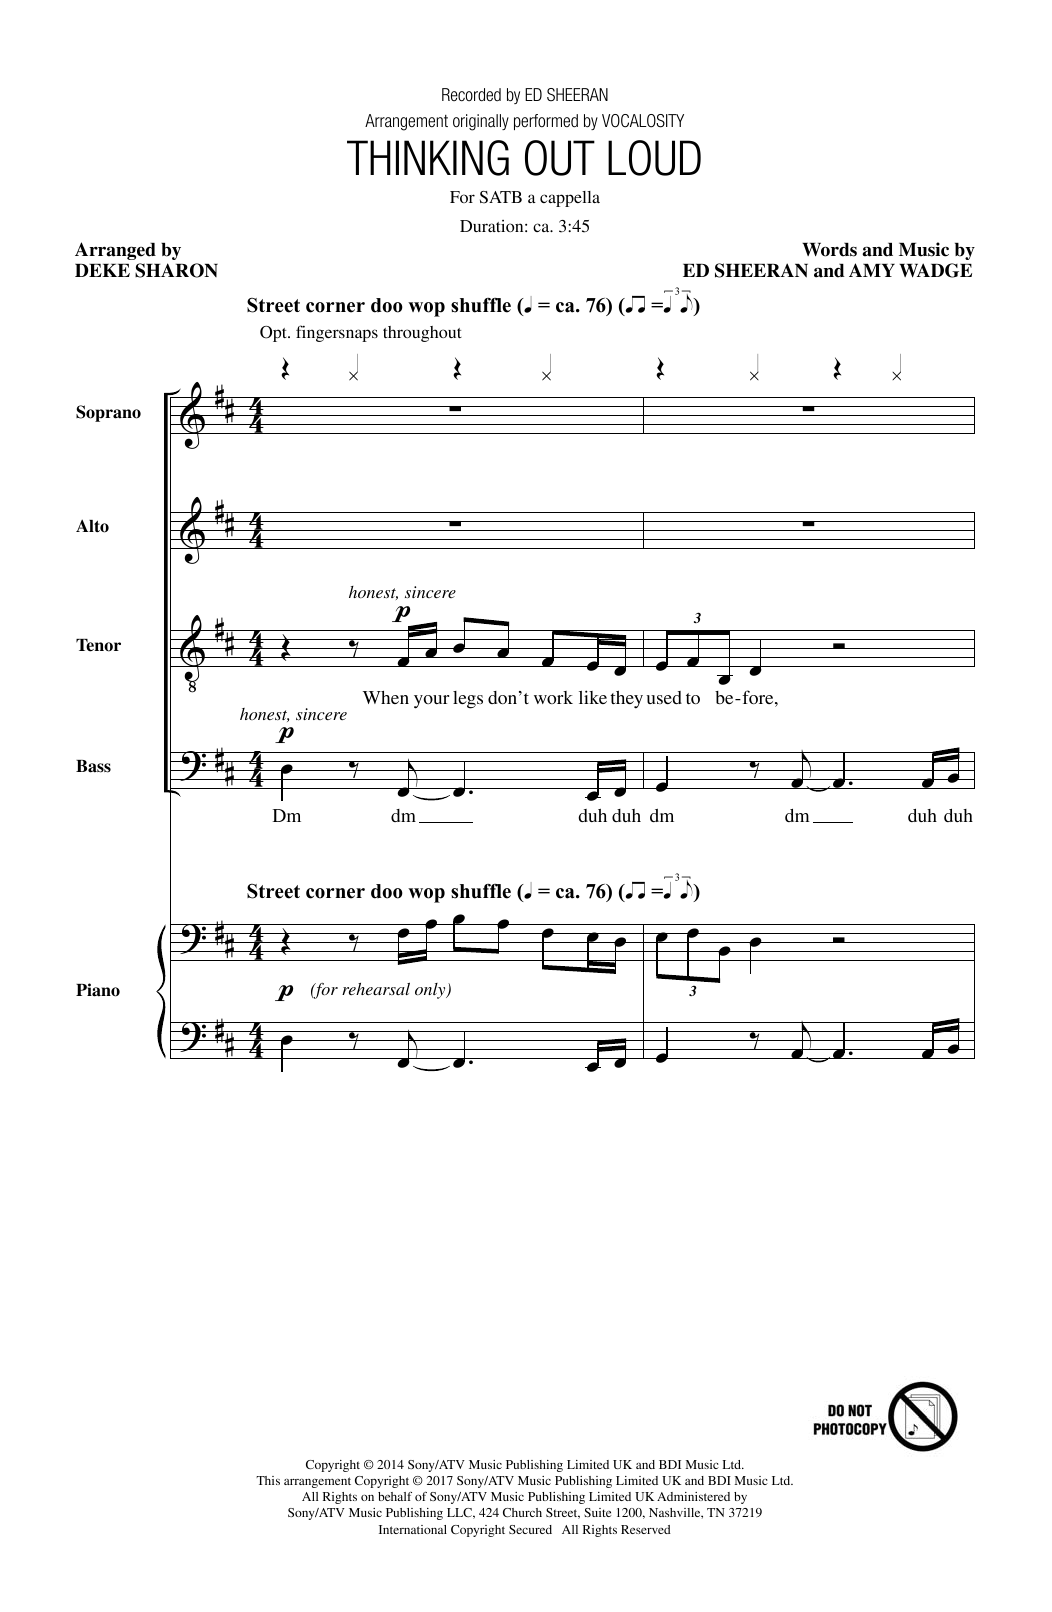 Ed Sheeran Thinking Out Loud (arr. Deke Sharon) Sheet Music Notes & Chords for SATB - Download or Print PDF